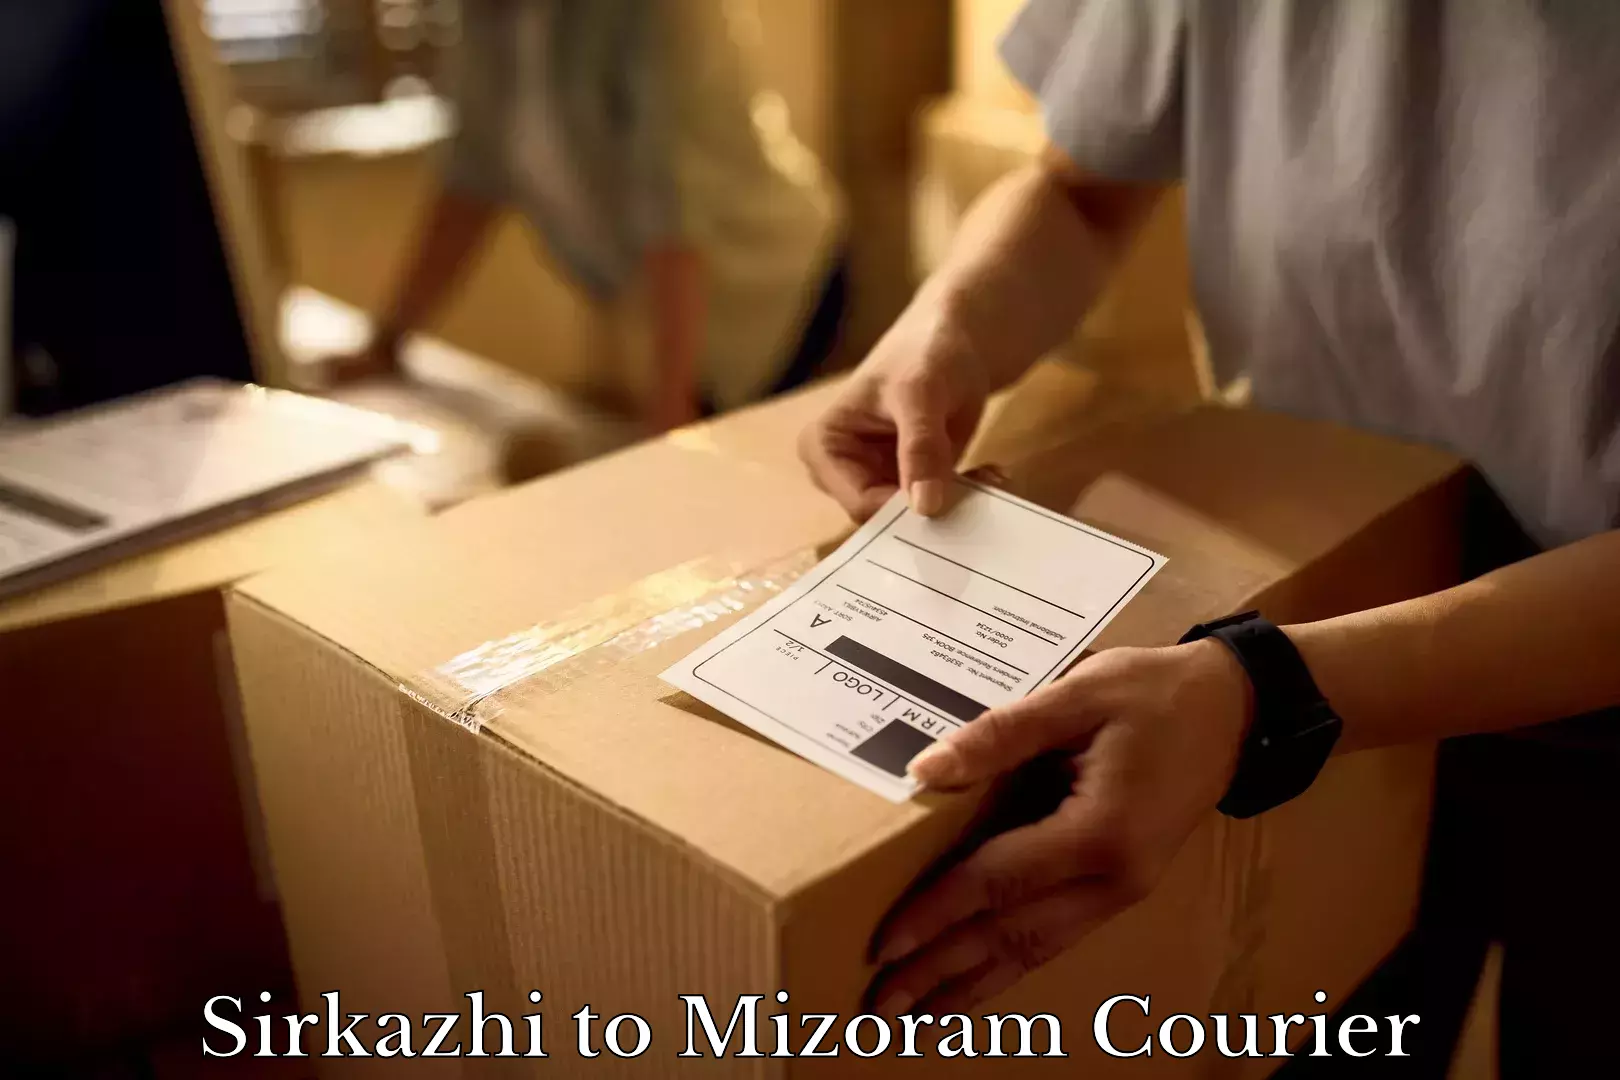 Professional moving company Sirkazhi to Mizoram